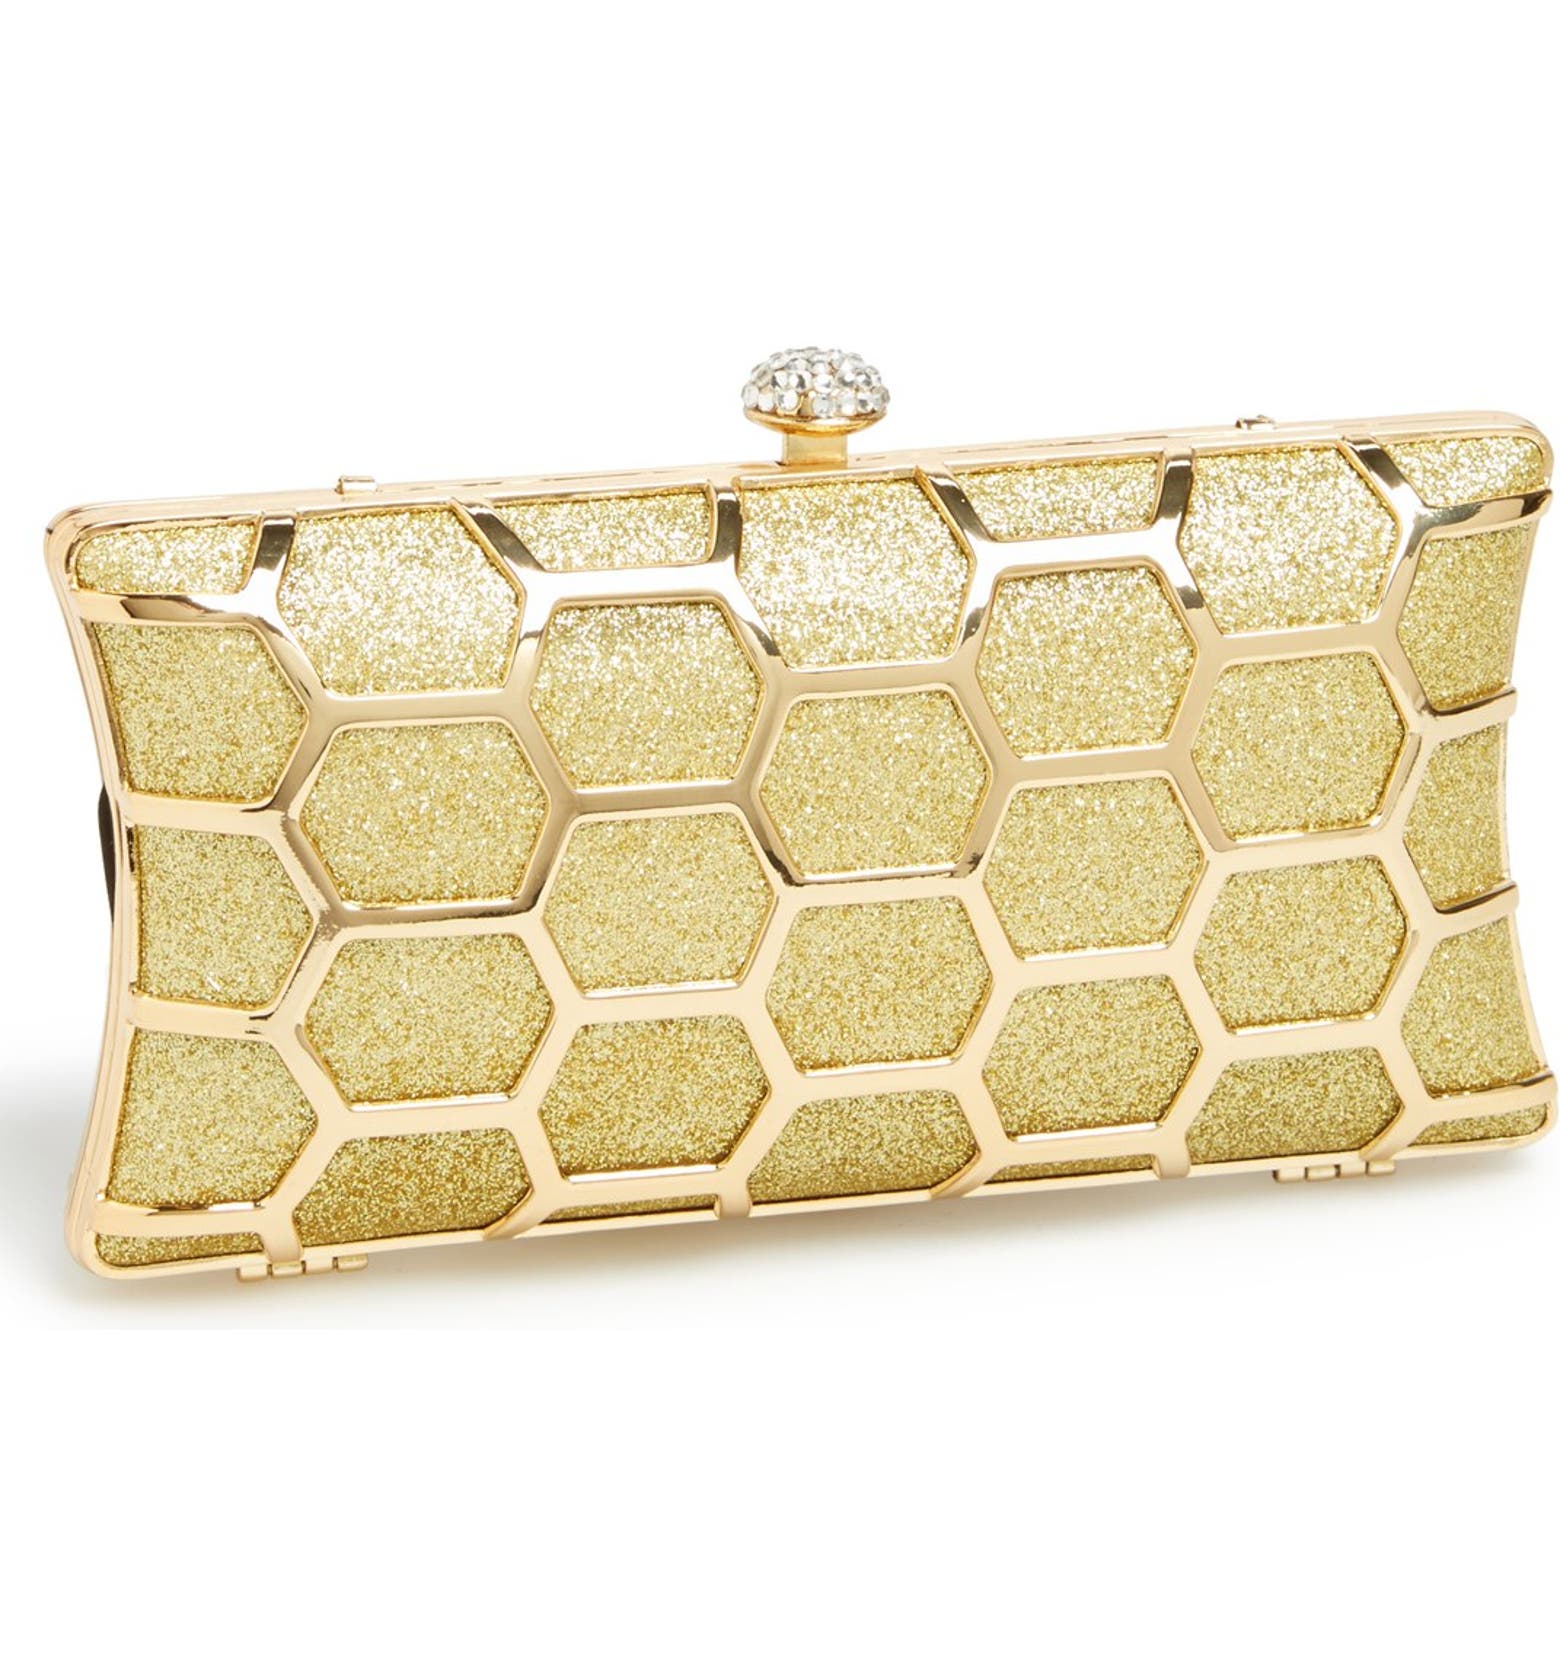 Amici Accessories 'Honeycomb' Clutch | Nordstrom